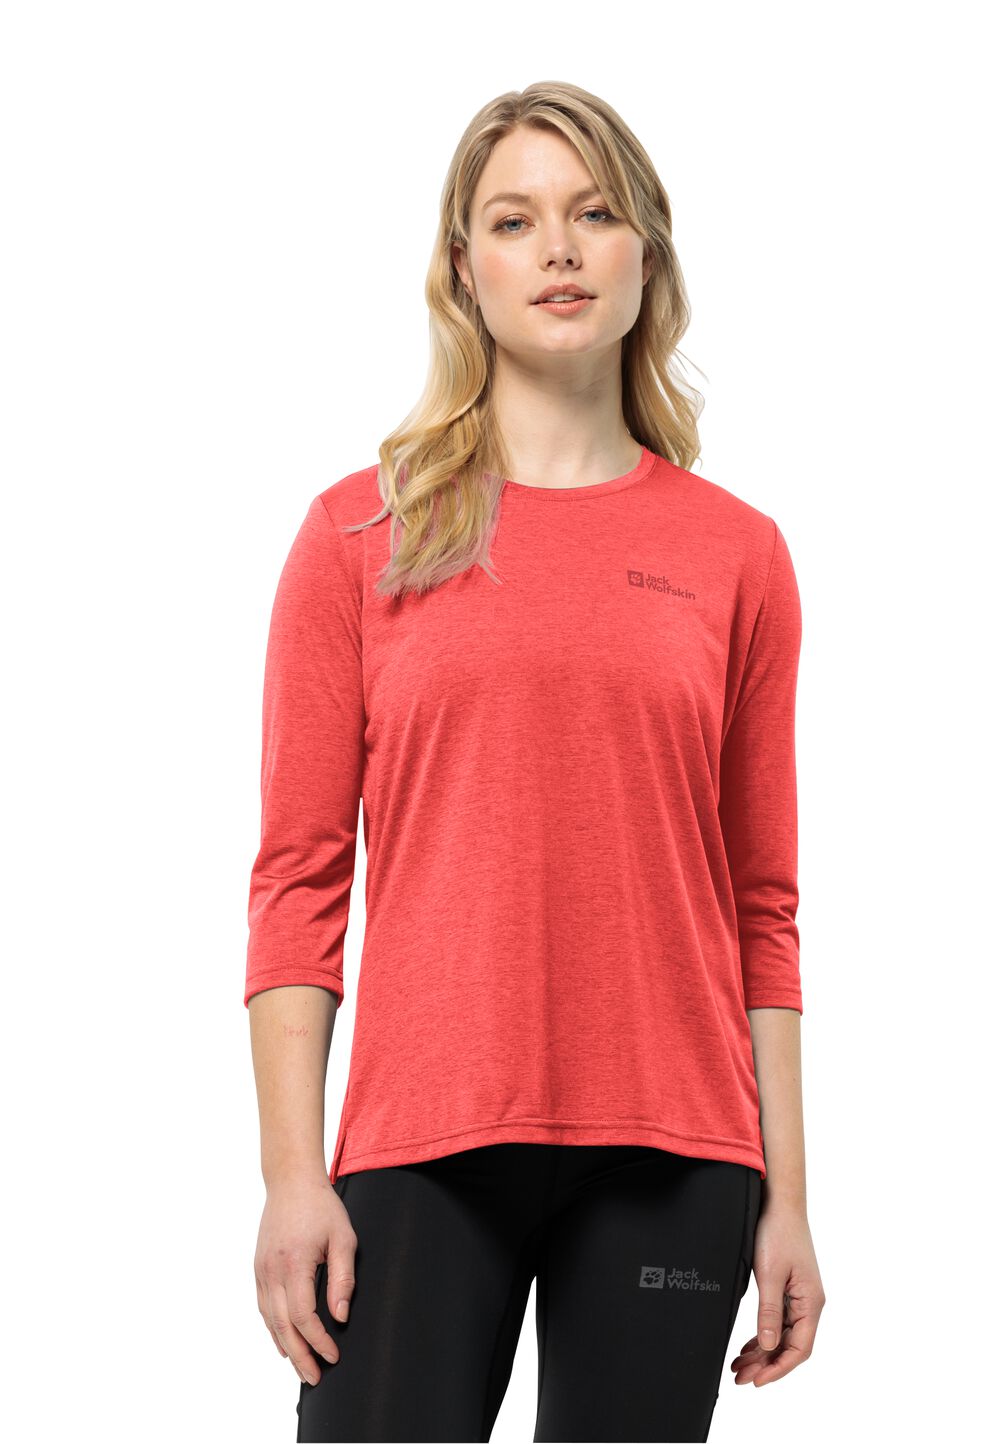 Jack Wolfskin Crosstrail 3 4 T-Shirt Women Functioneel shirt Dames XXL rood vibrant red